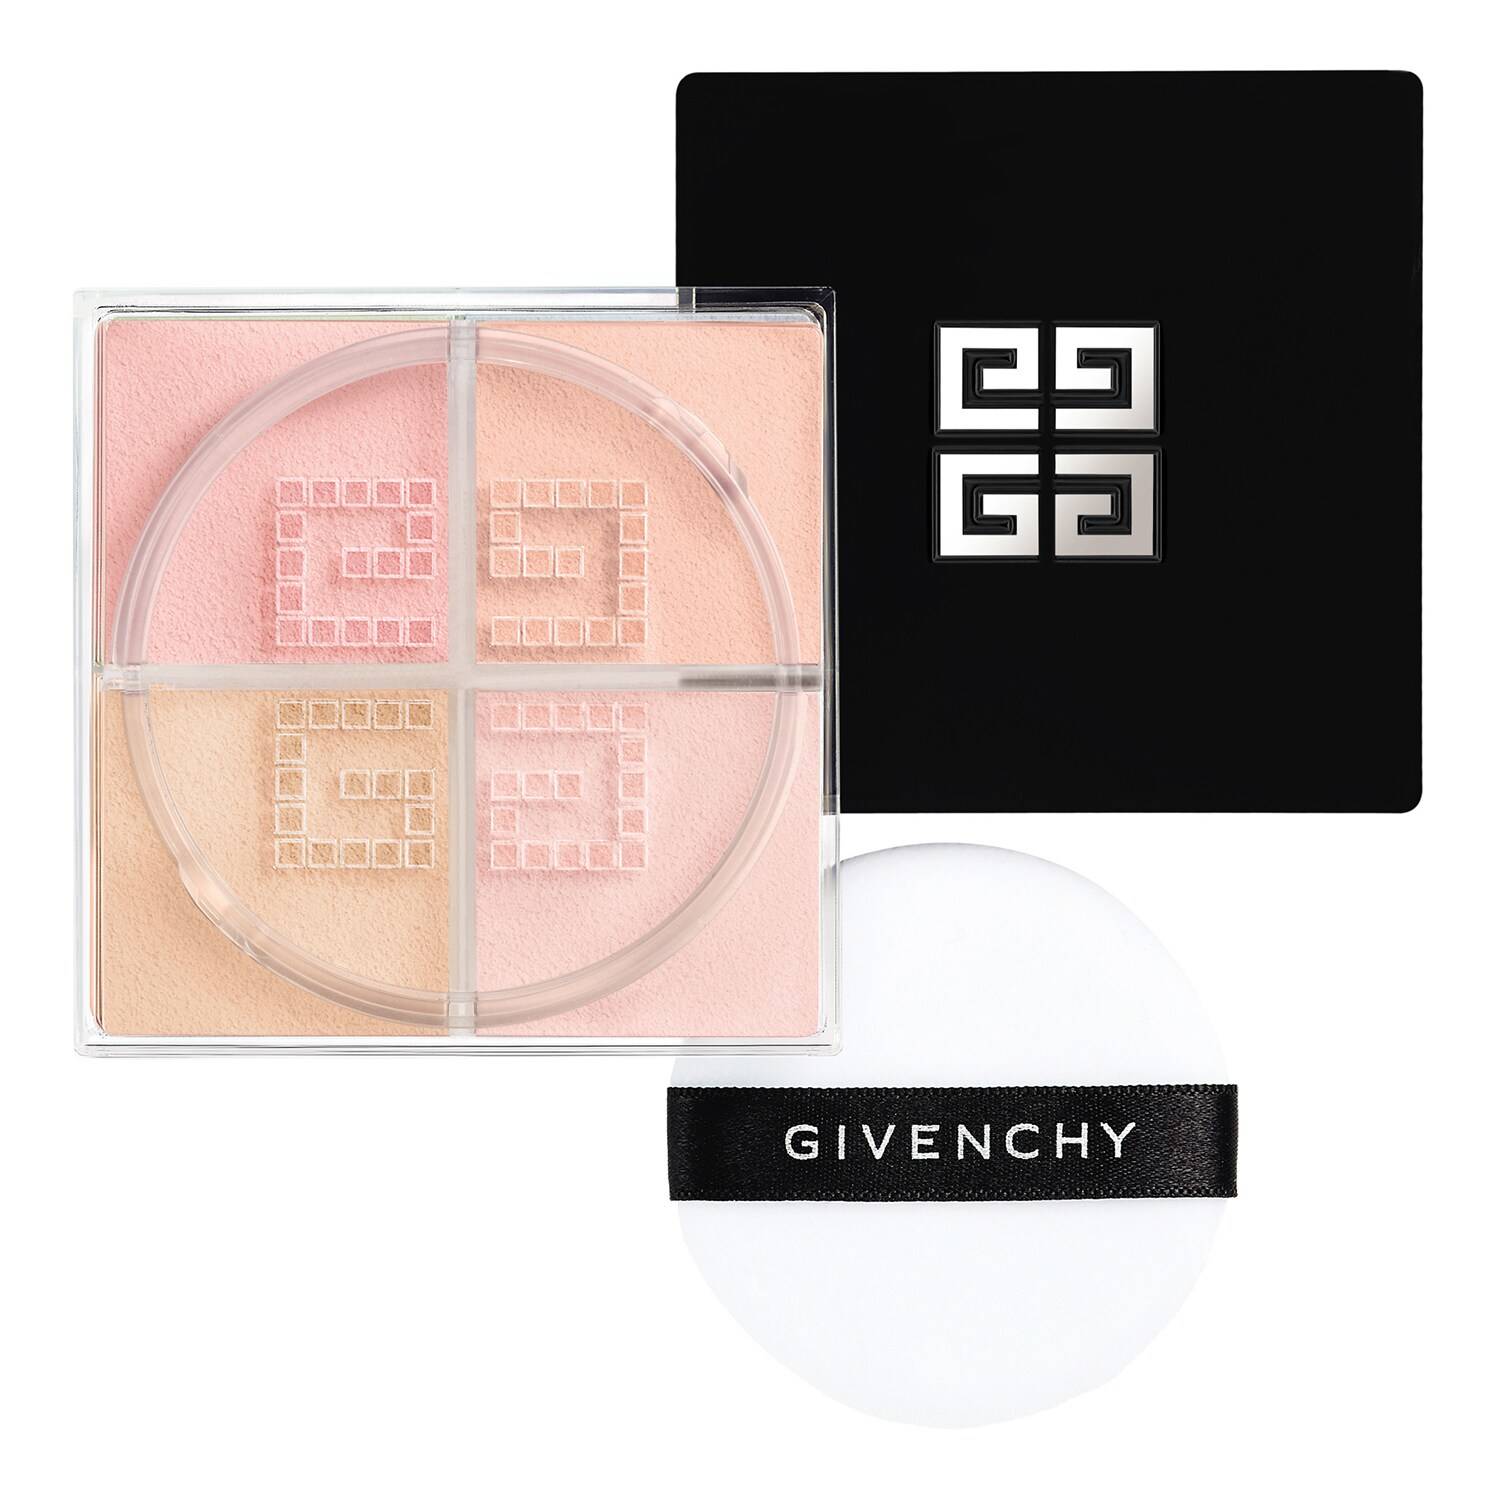 Givenchy Prisme Libre Mini 4-Color Loose Powder Mini 4G - Sephora Exclusive Ndeg3 - Voile Rose